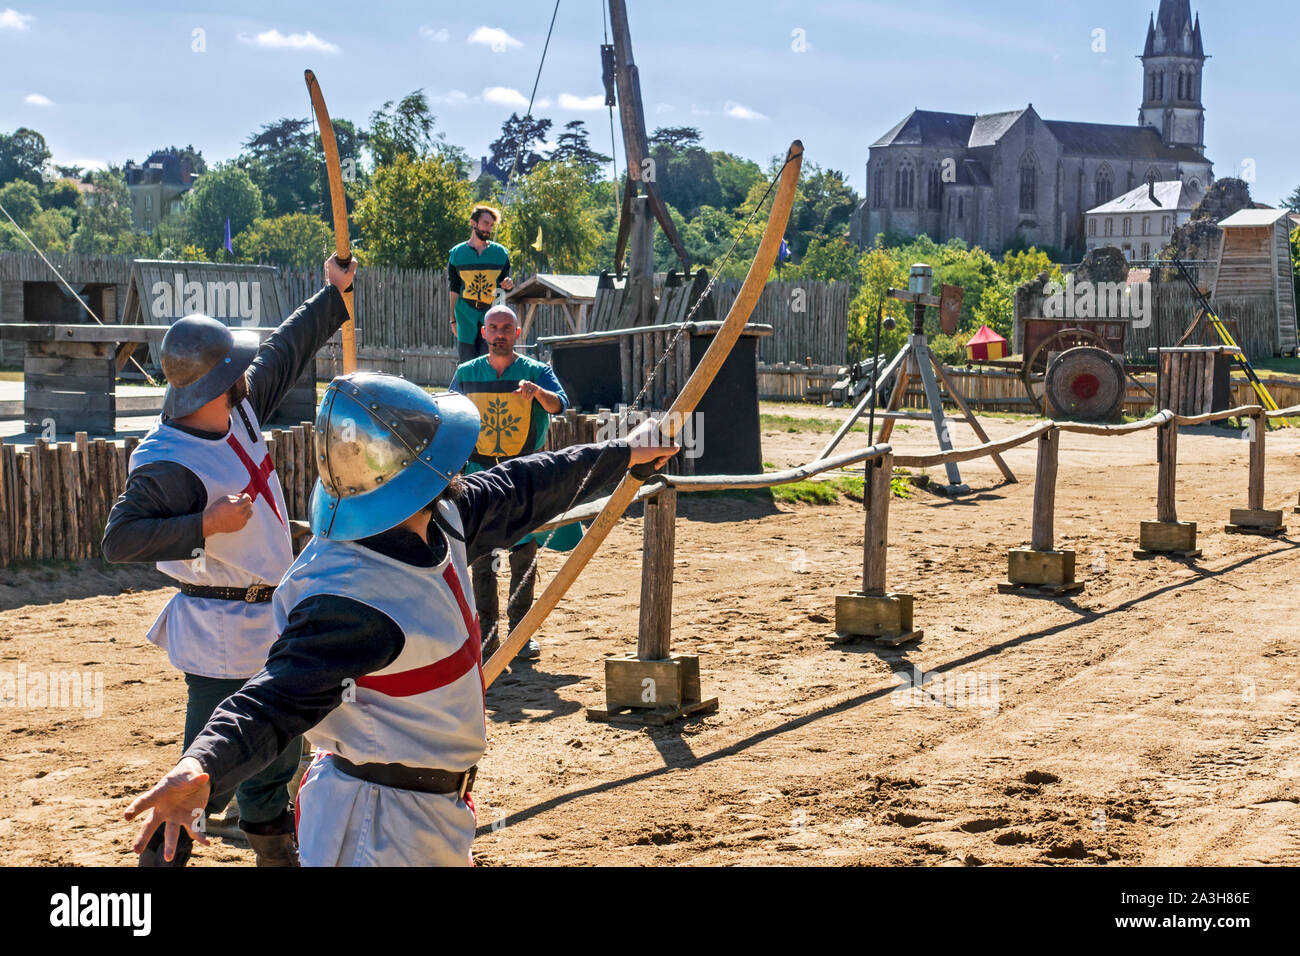 Re-enactors giocando arcieri medievali durante il Medioevo spettacolo presso il Château de Tiffauges, castello medievale, della Vandea, Francia Foto Stock